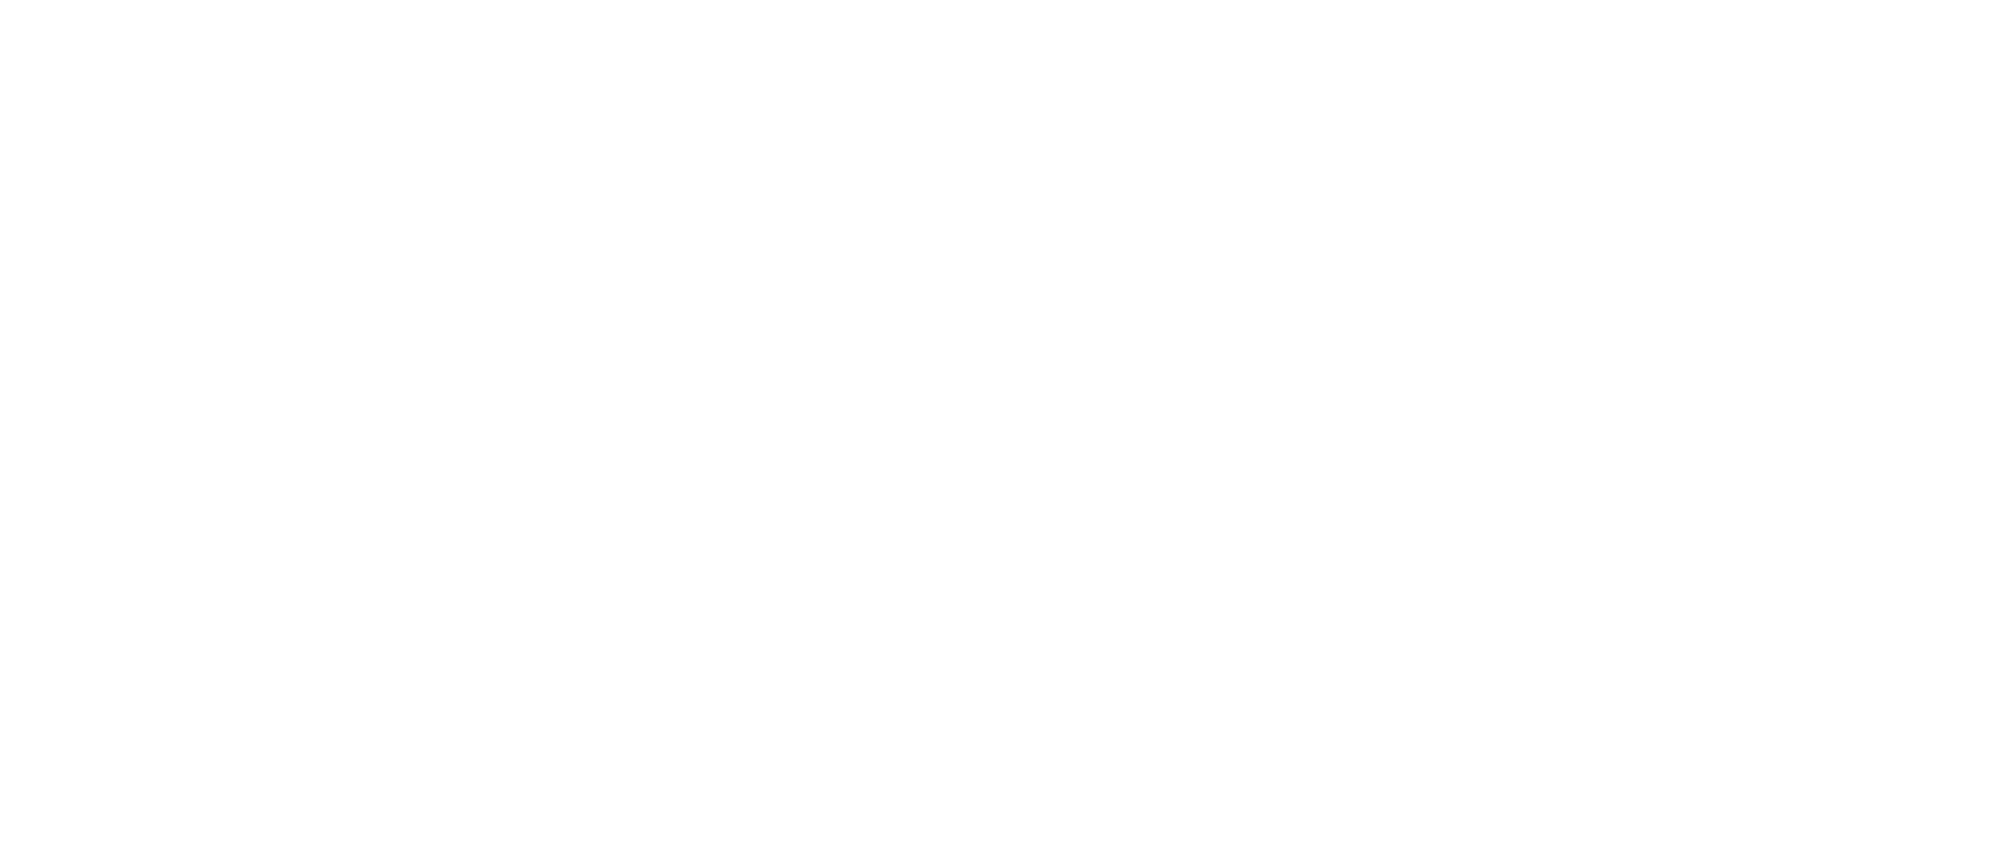 Huntingdon Farm